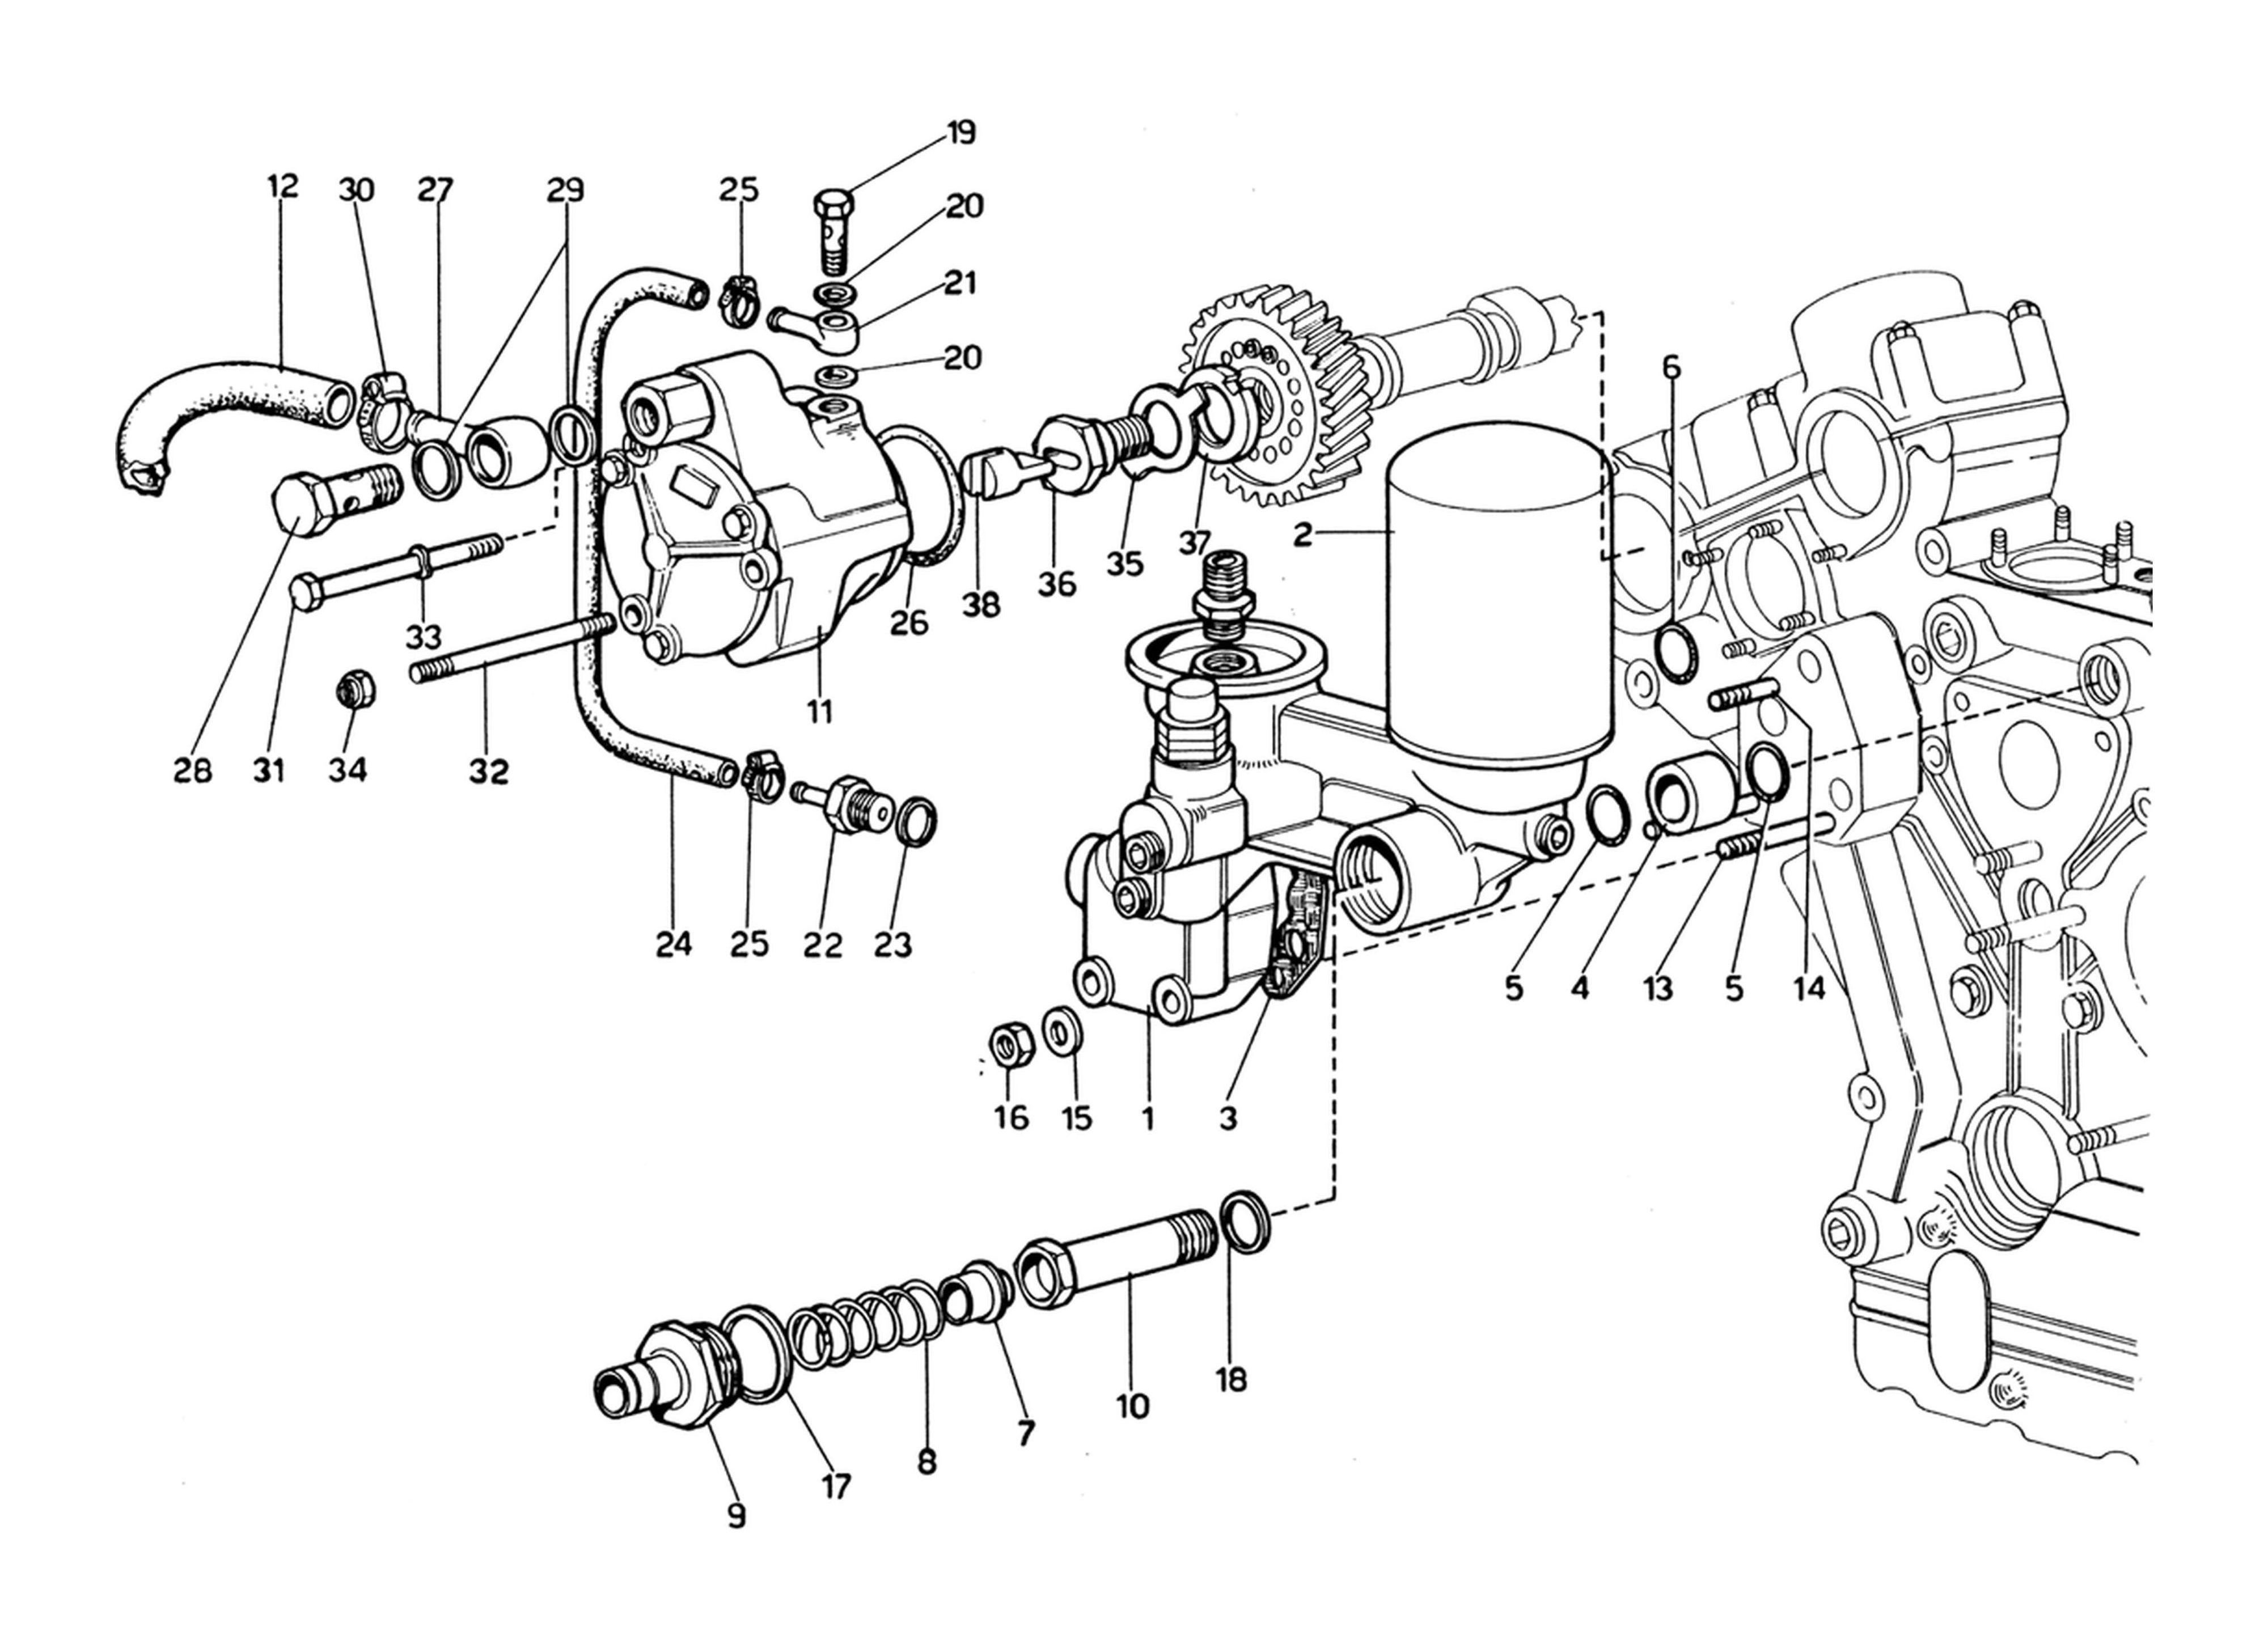 Schematic: Engine Oil Filters & Brake Booster Vacuum Pump